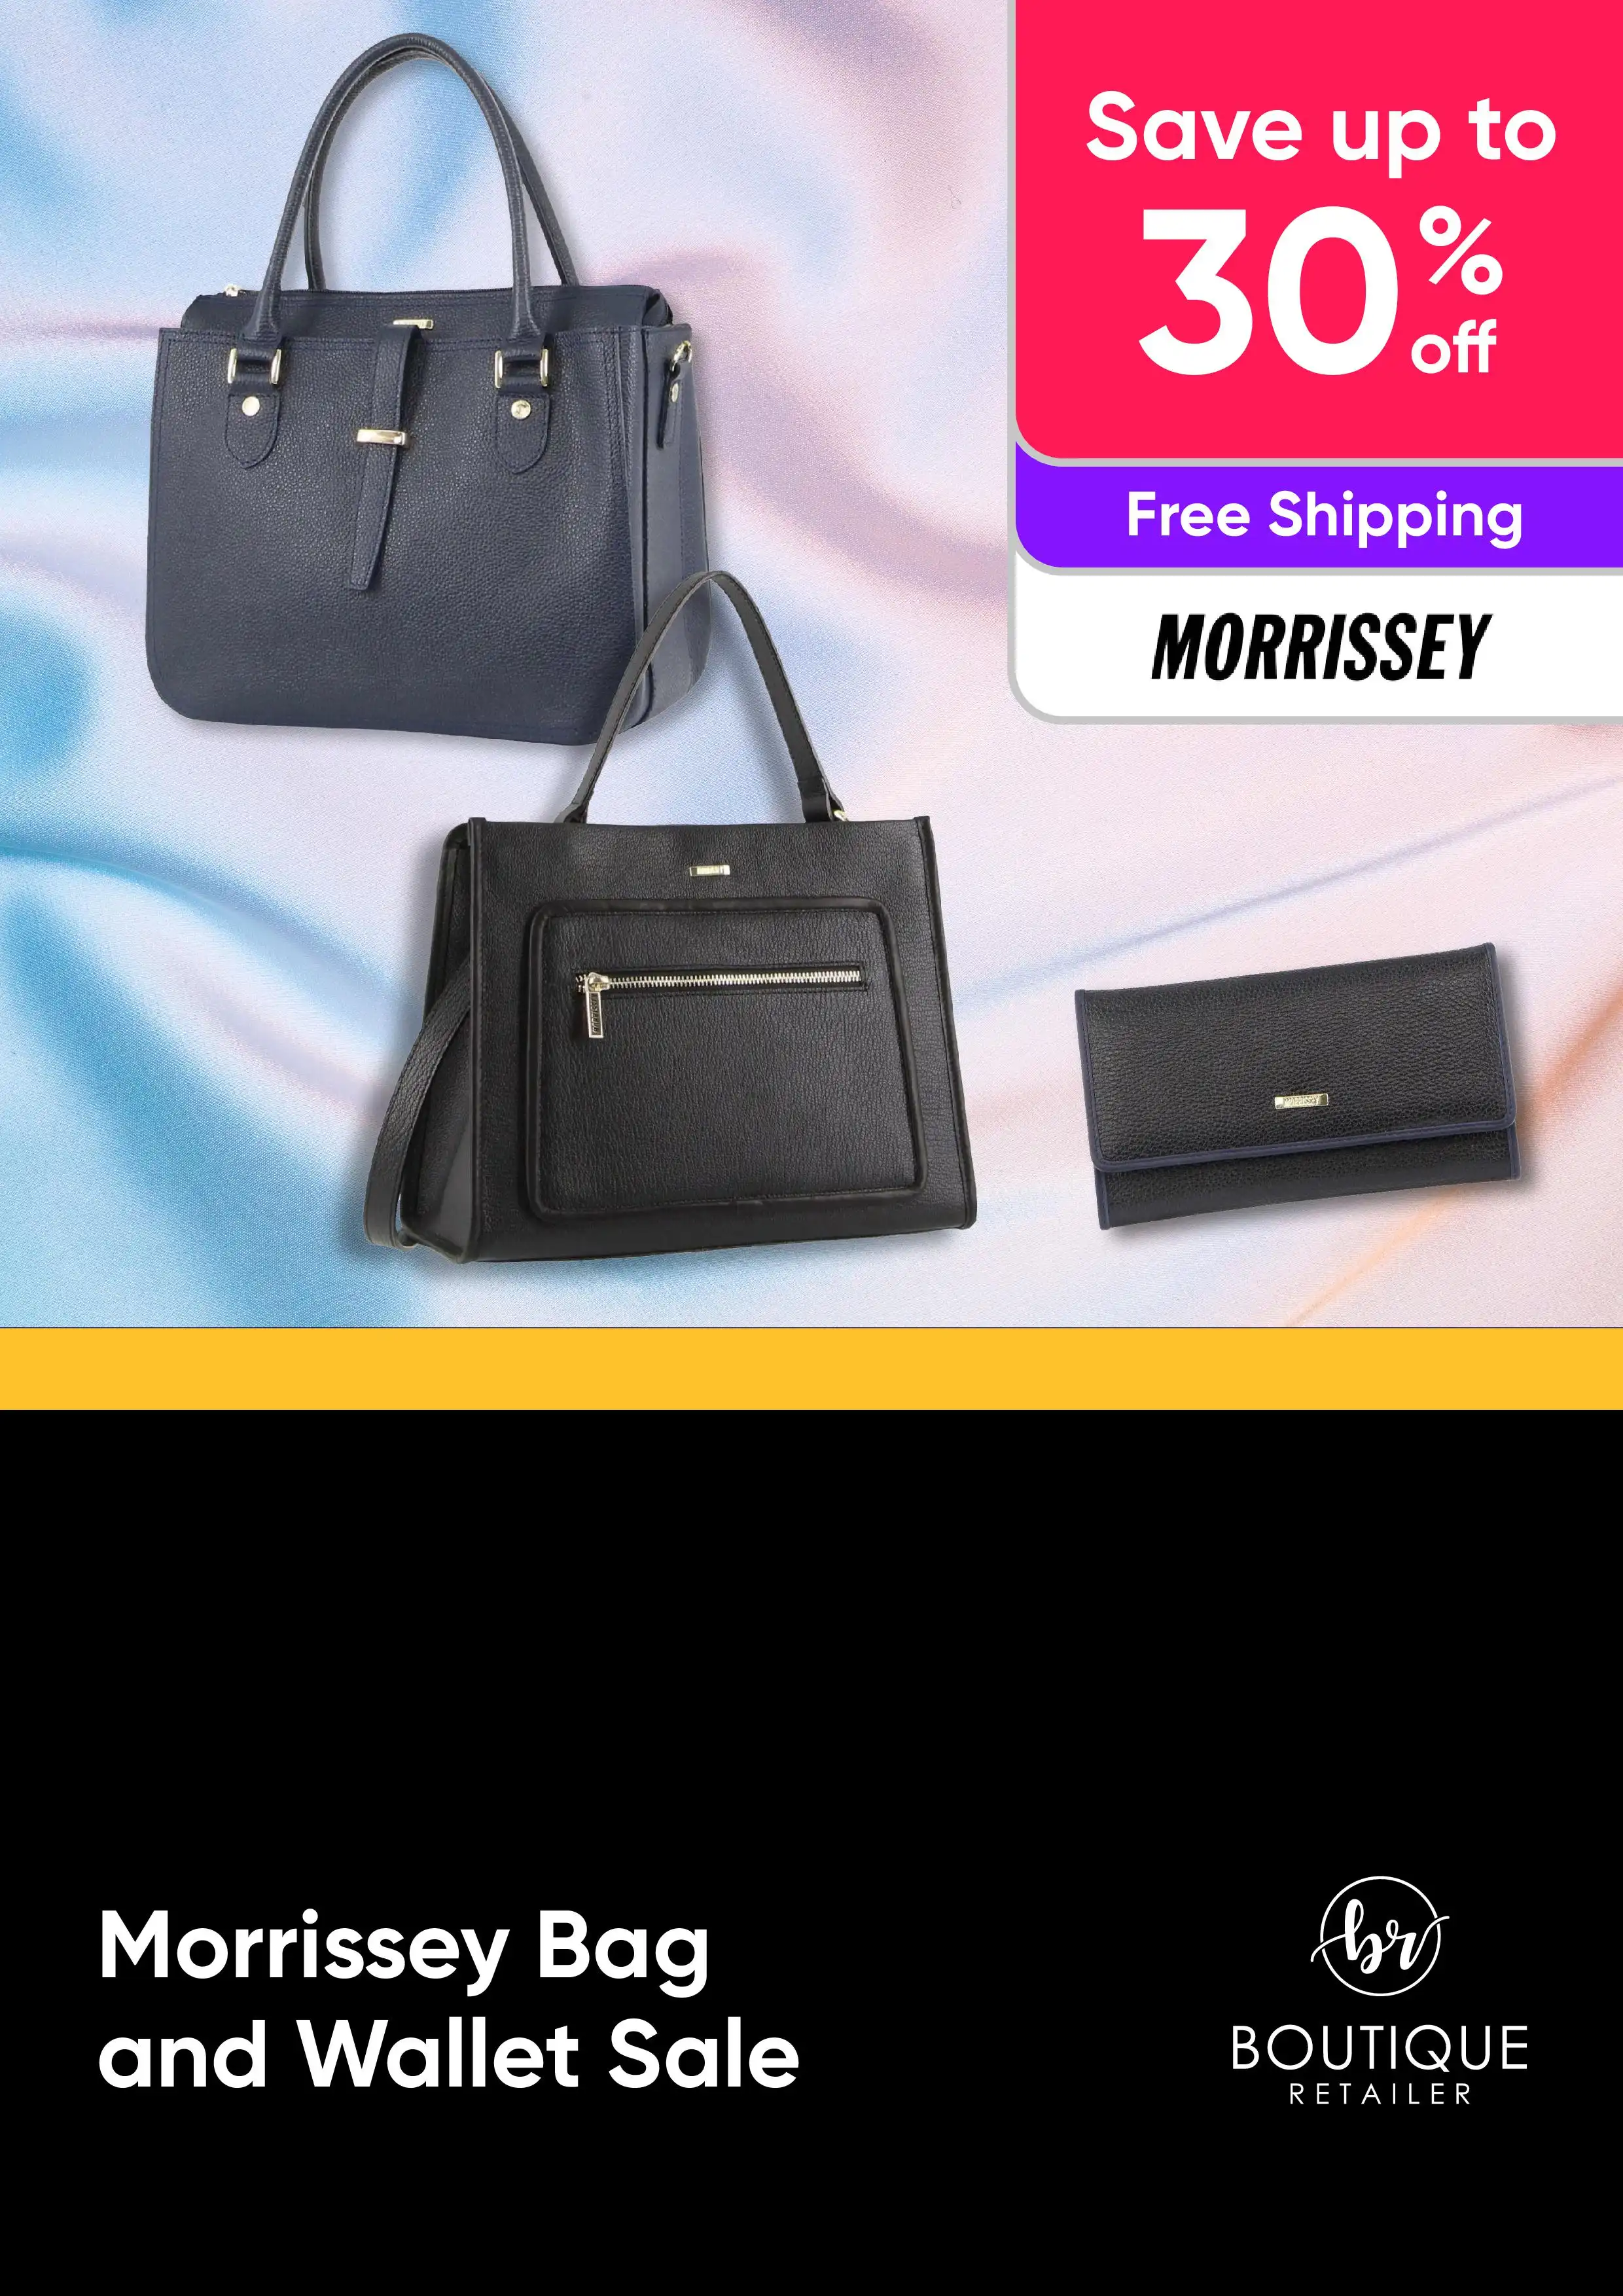 Morrissey Bag and Wallet Sale - Morrissey - up to 30% off